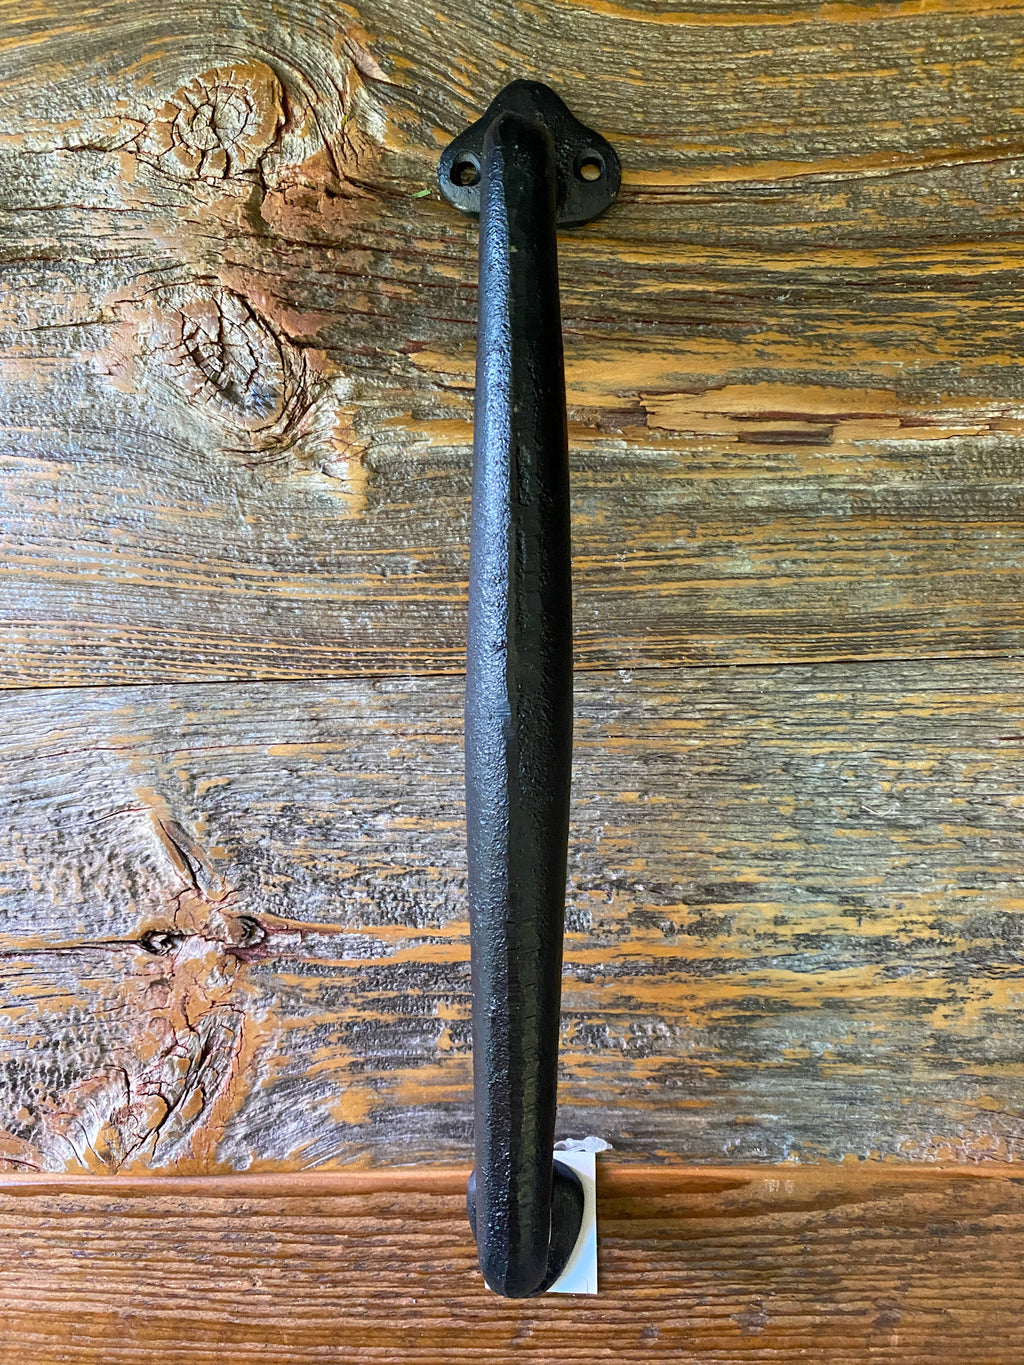 Nordic style drawer handle drawer handle wardrobe handle wooden handle  solid wood handle rustic door handle